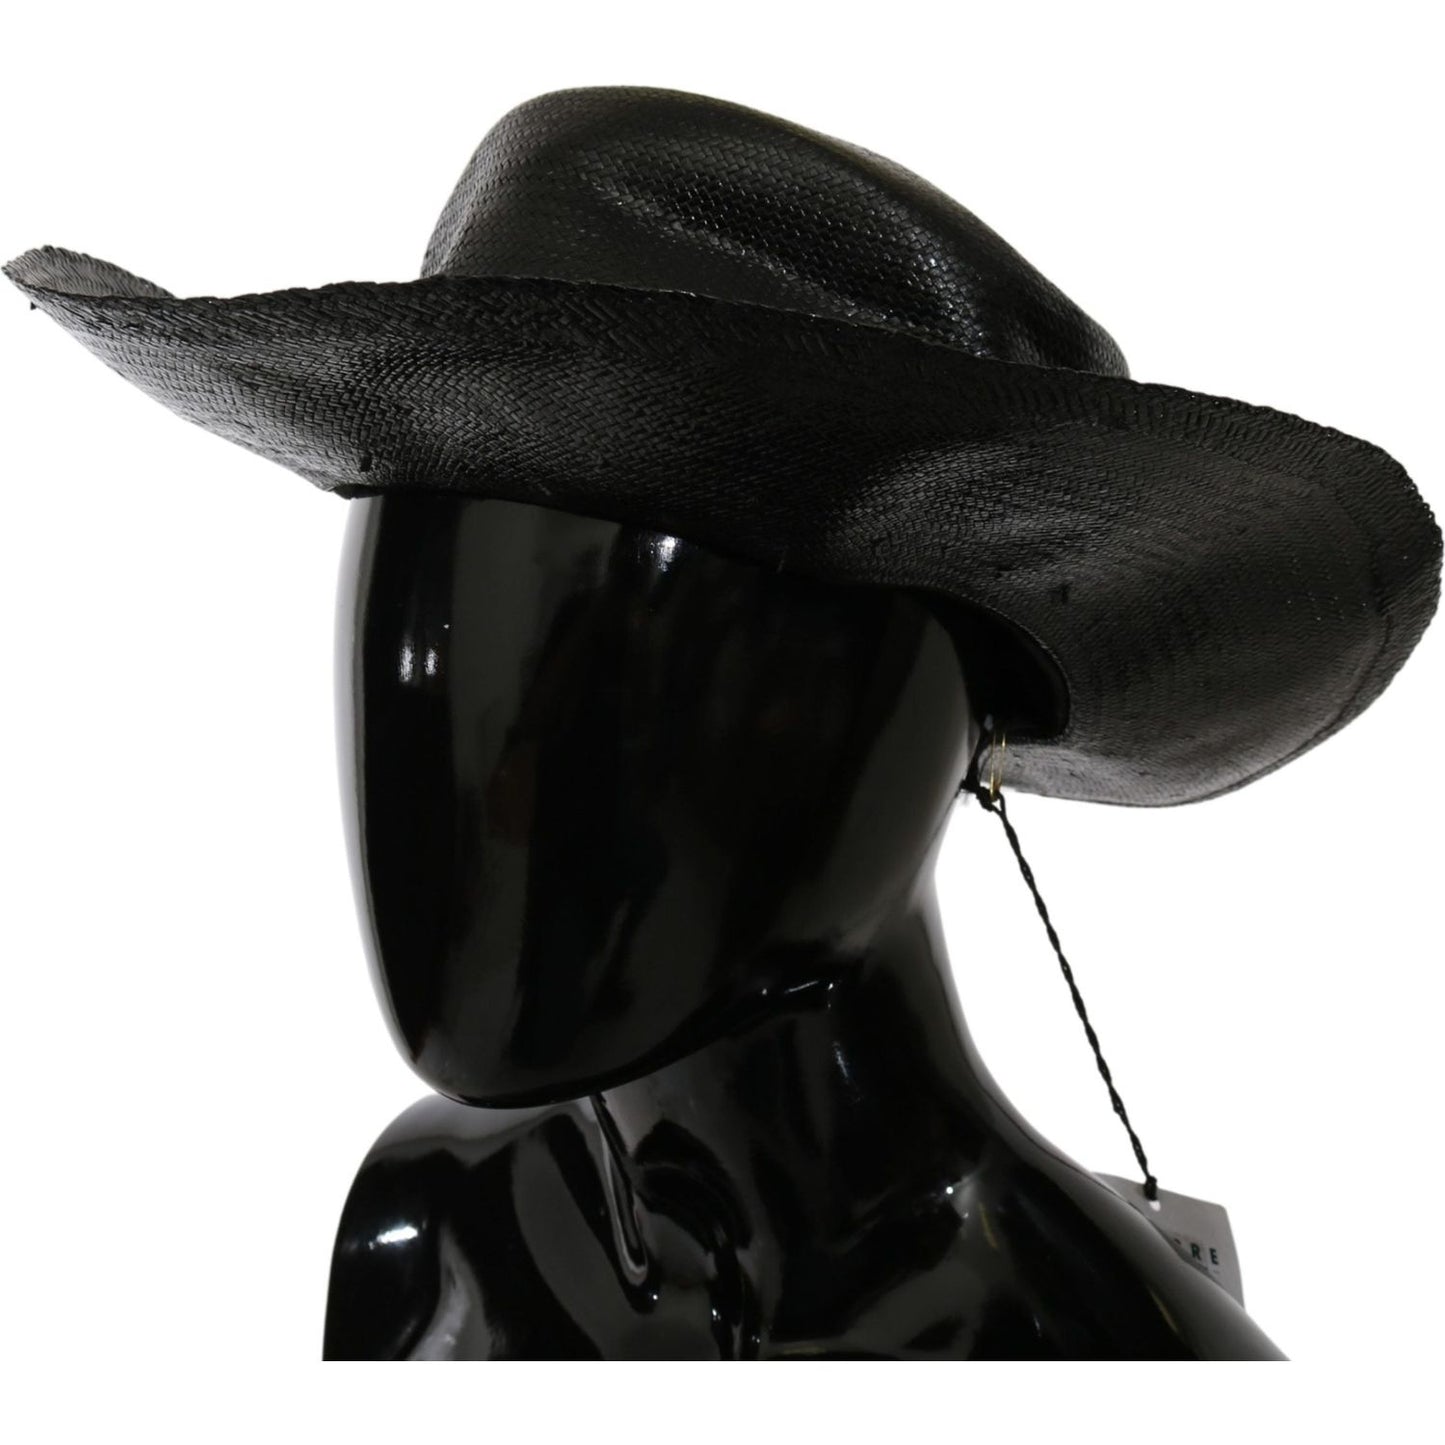 Costume National Chic Black Floppy Hat - Timeless Elegance black-wide-brim-cowboy-solid-hat Hat IMG_0920-scaled-9812c8e2-a18.jpg